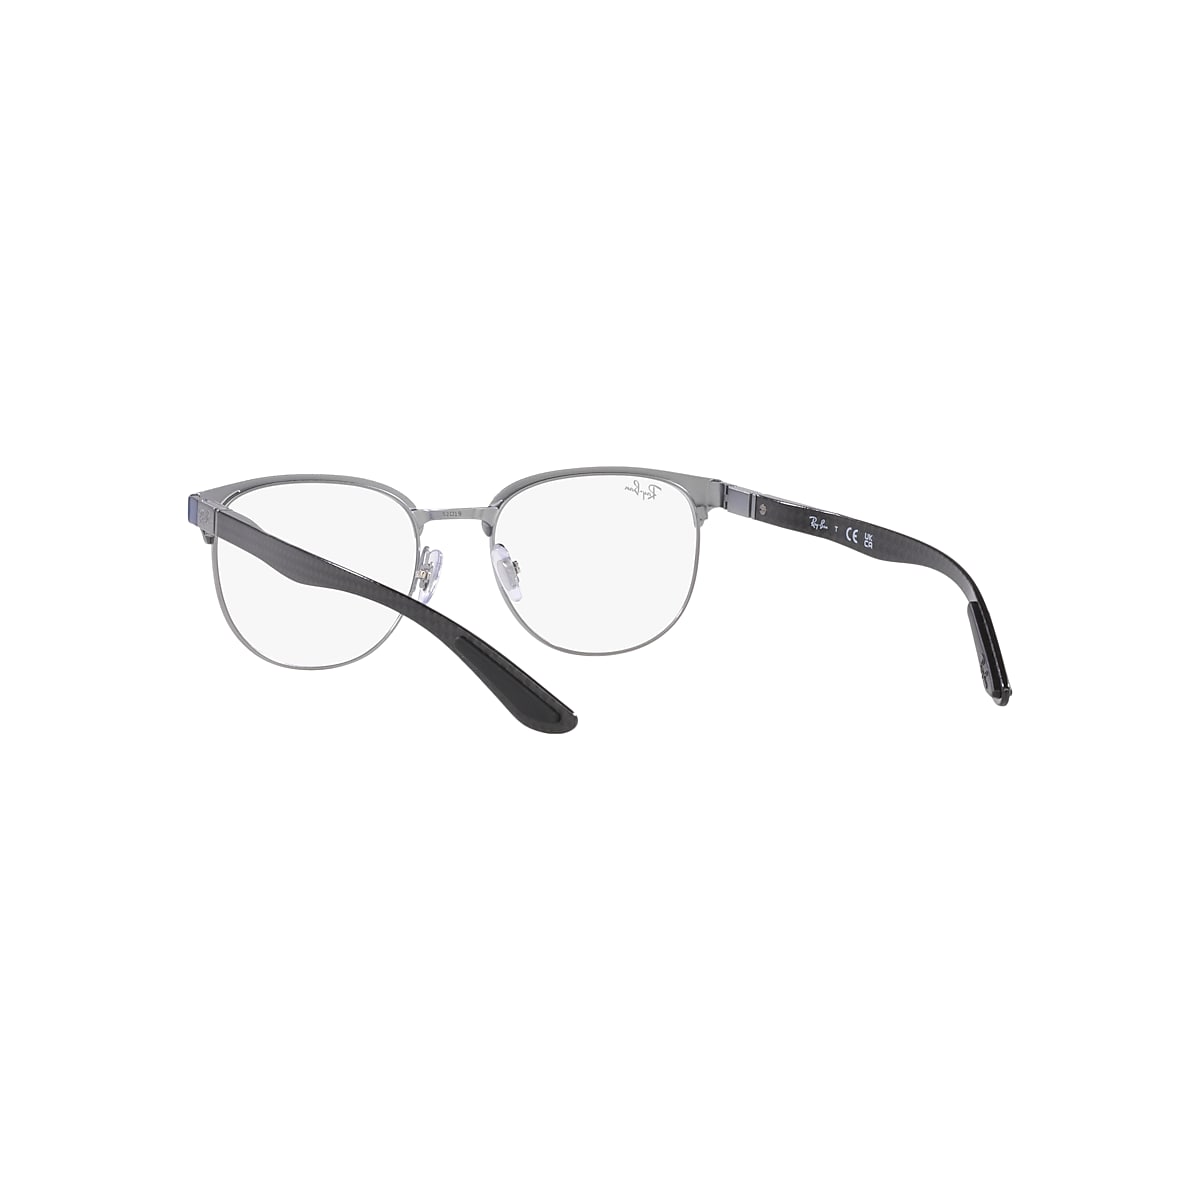 RB8422 OPTICS Eyeglasses with Blue On Gunmetal Frame - RB8422